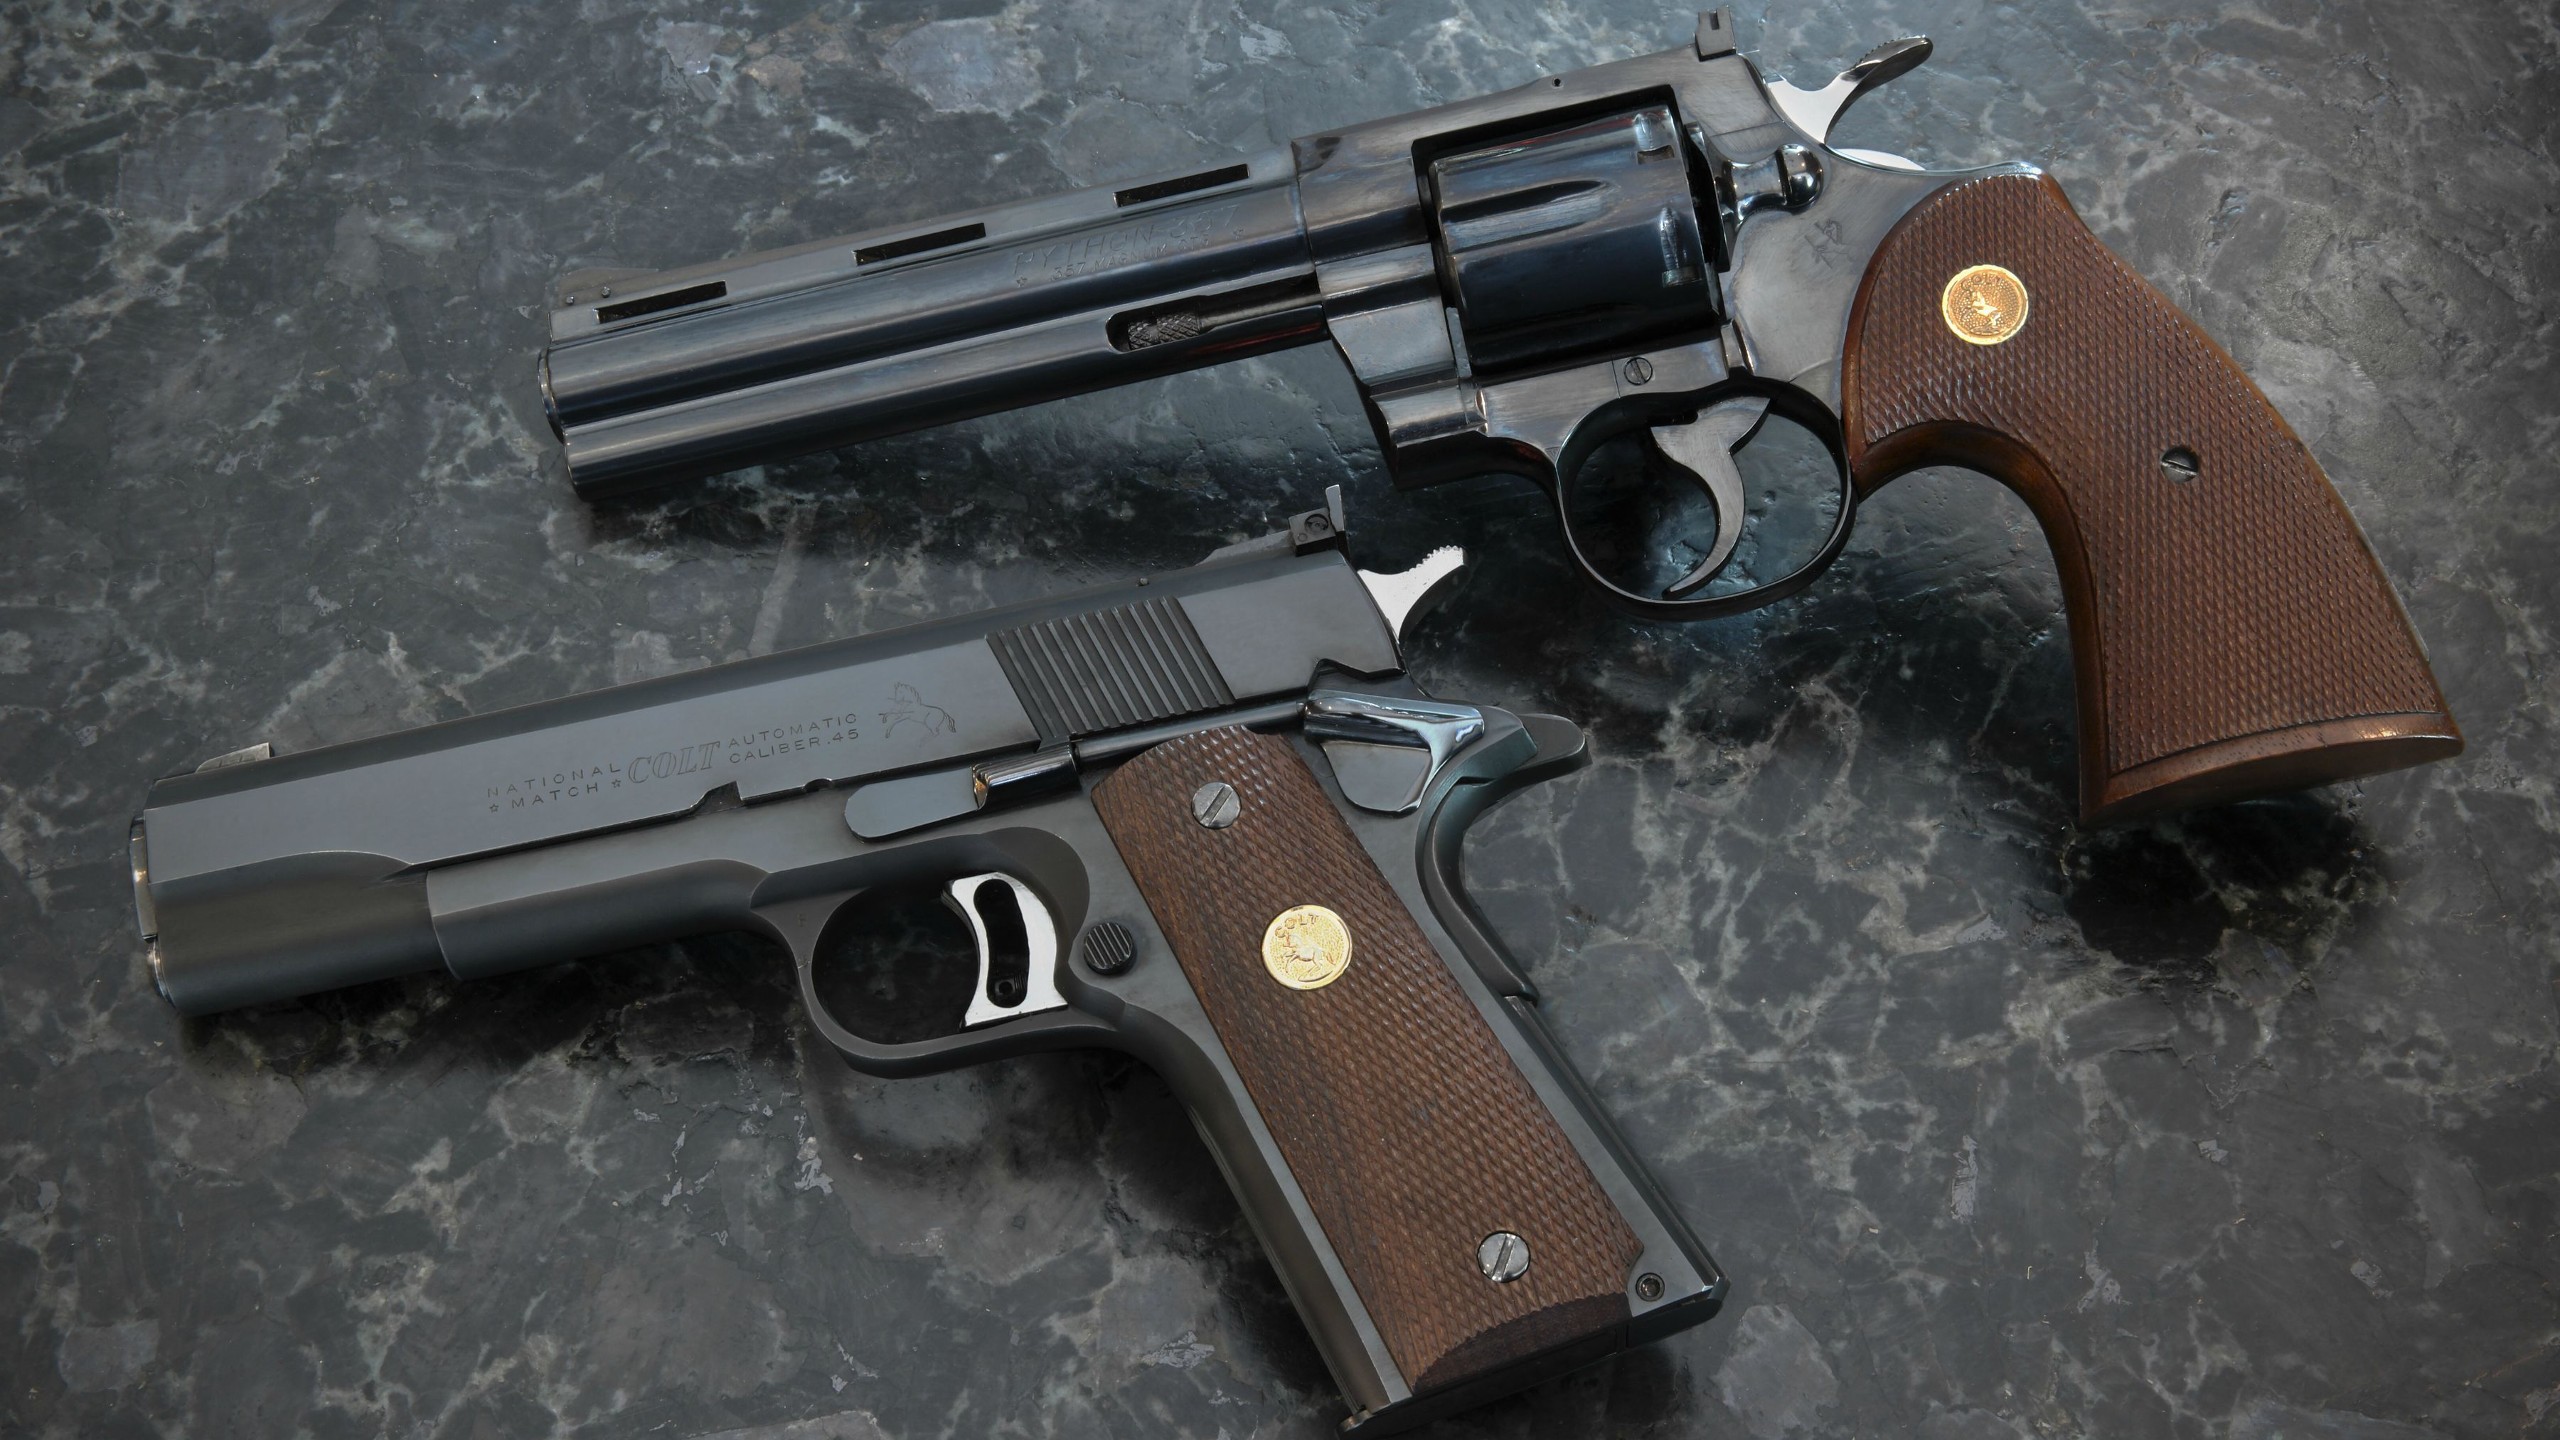 General 2560x1440 gun pistol M1911 Colt revolver .357 Magnum 1911 Colt Python weapon American firearms side view closeup